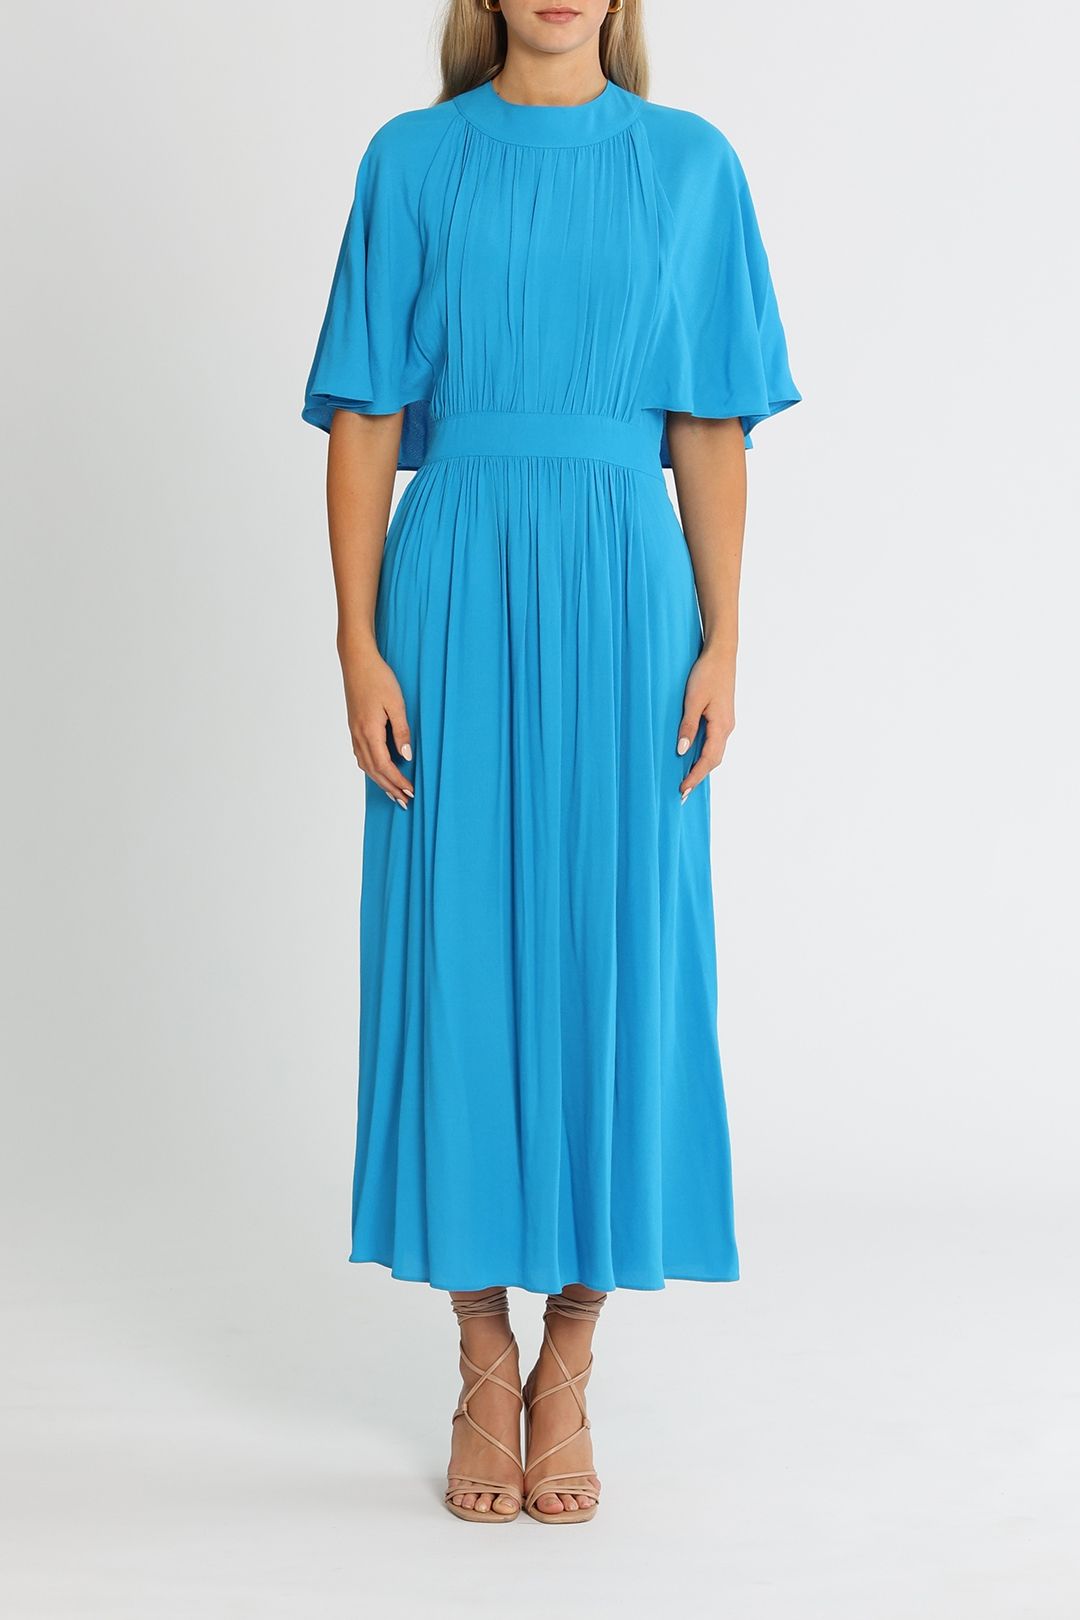 Hire Amelia Cape Sleeve Dress in Blue | Whistles | GlamCorner